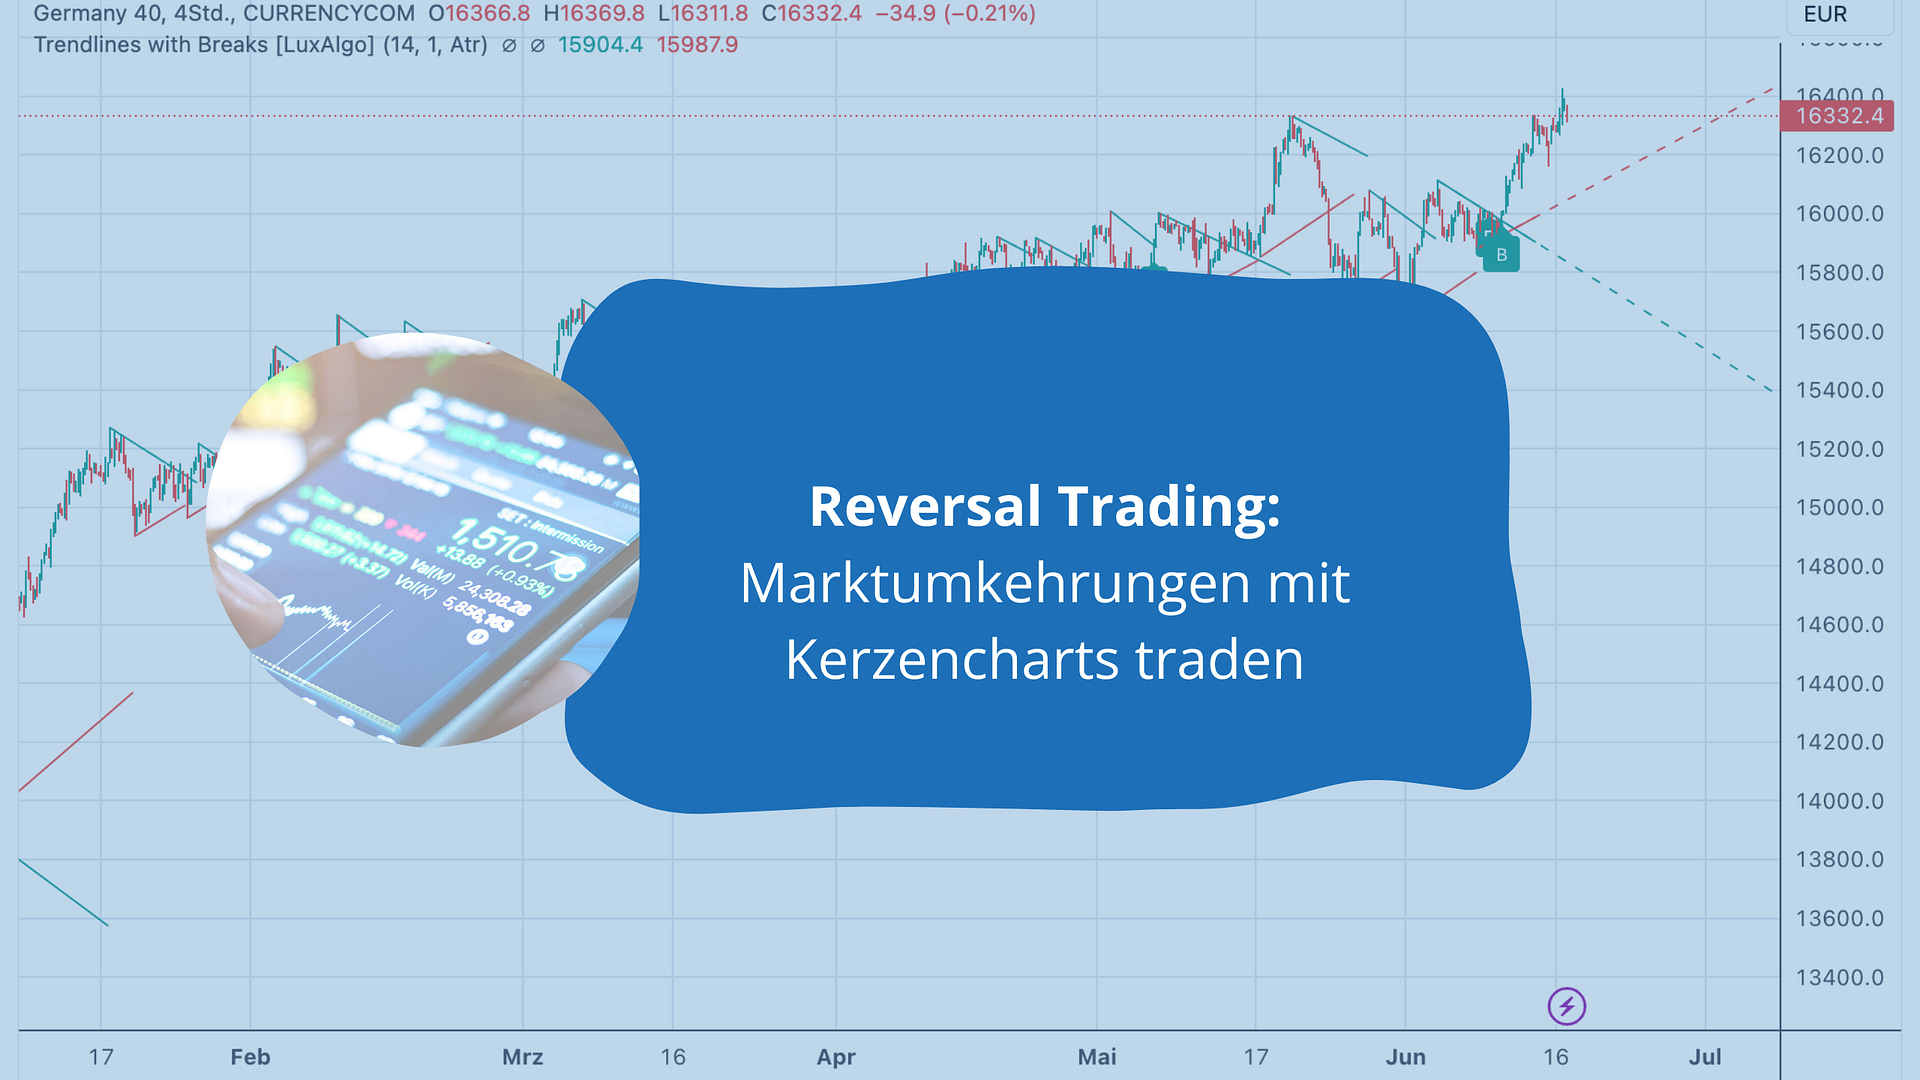 Reversal Trading: Marktumkehrungen mit Kerzencharts traden